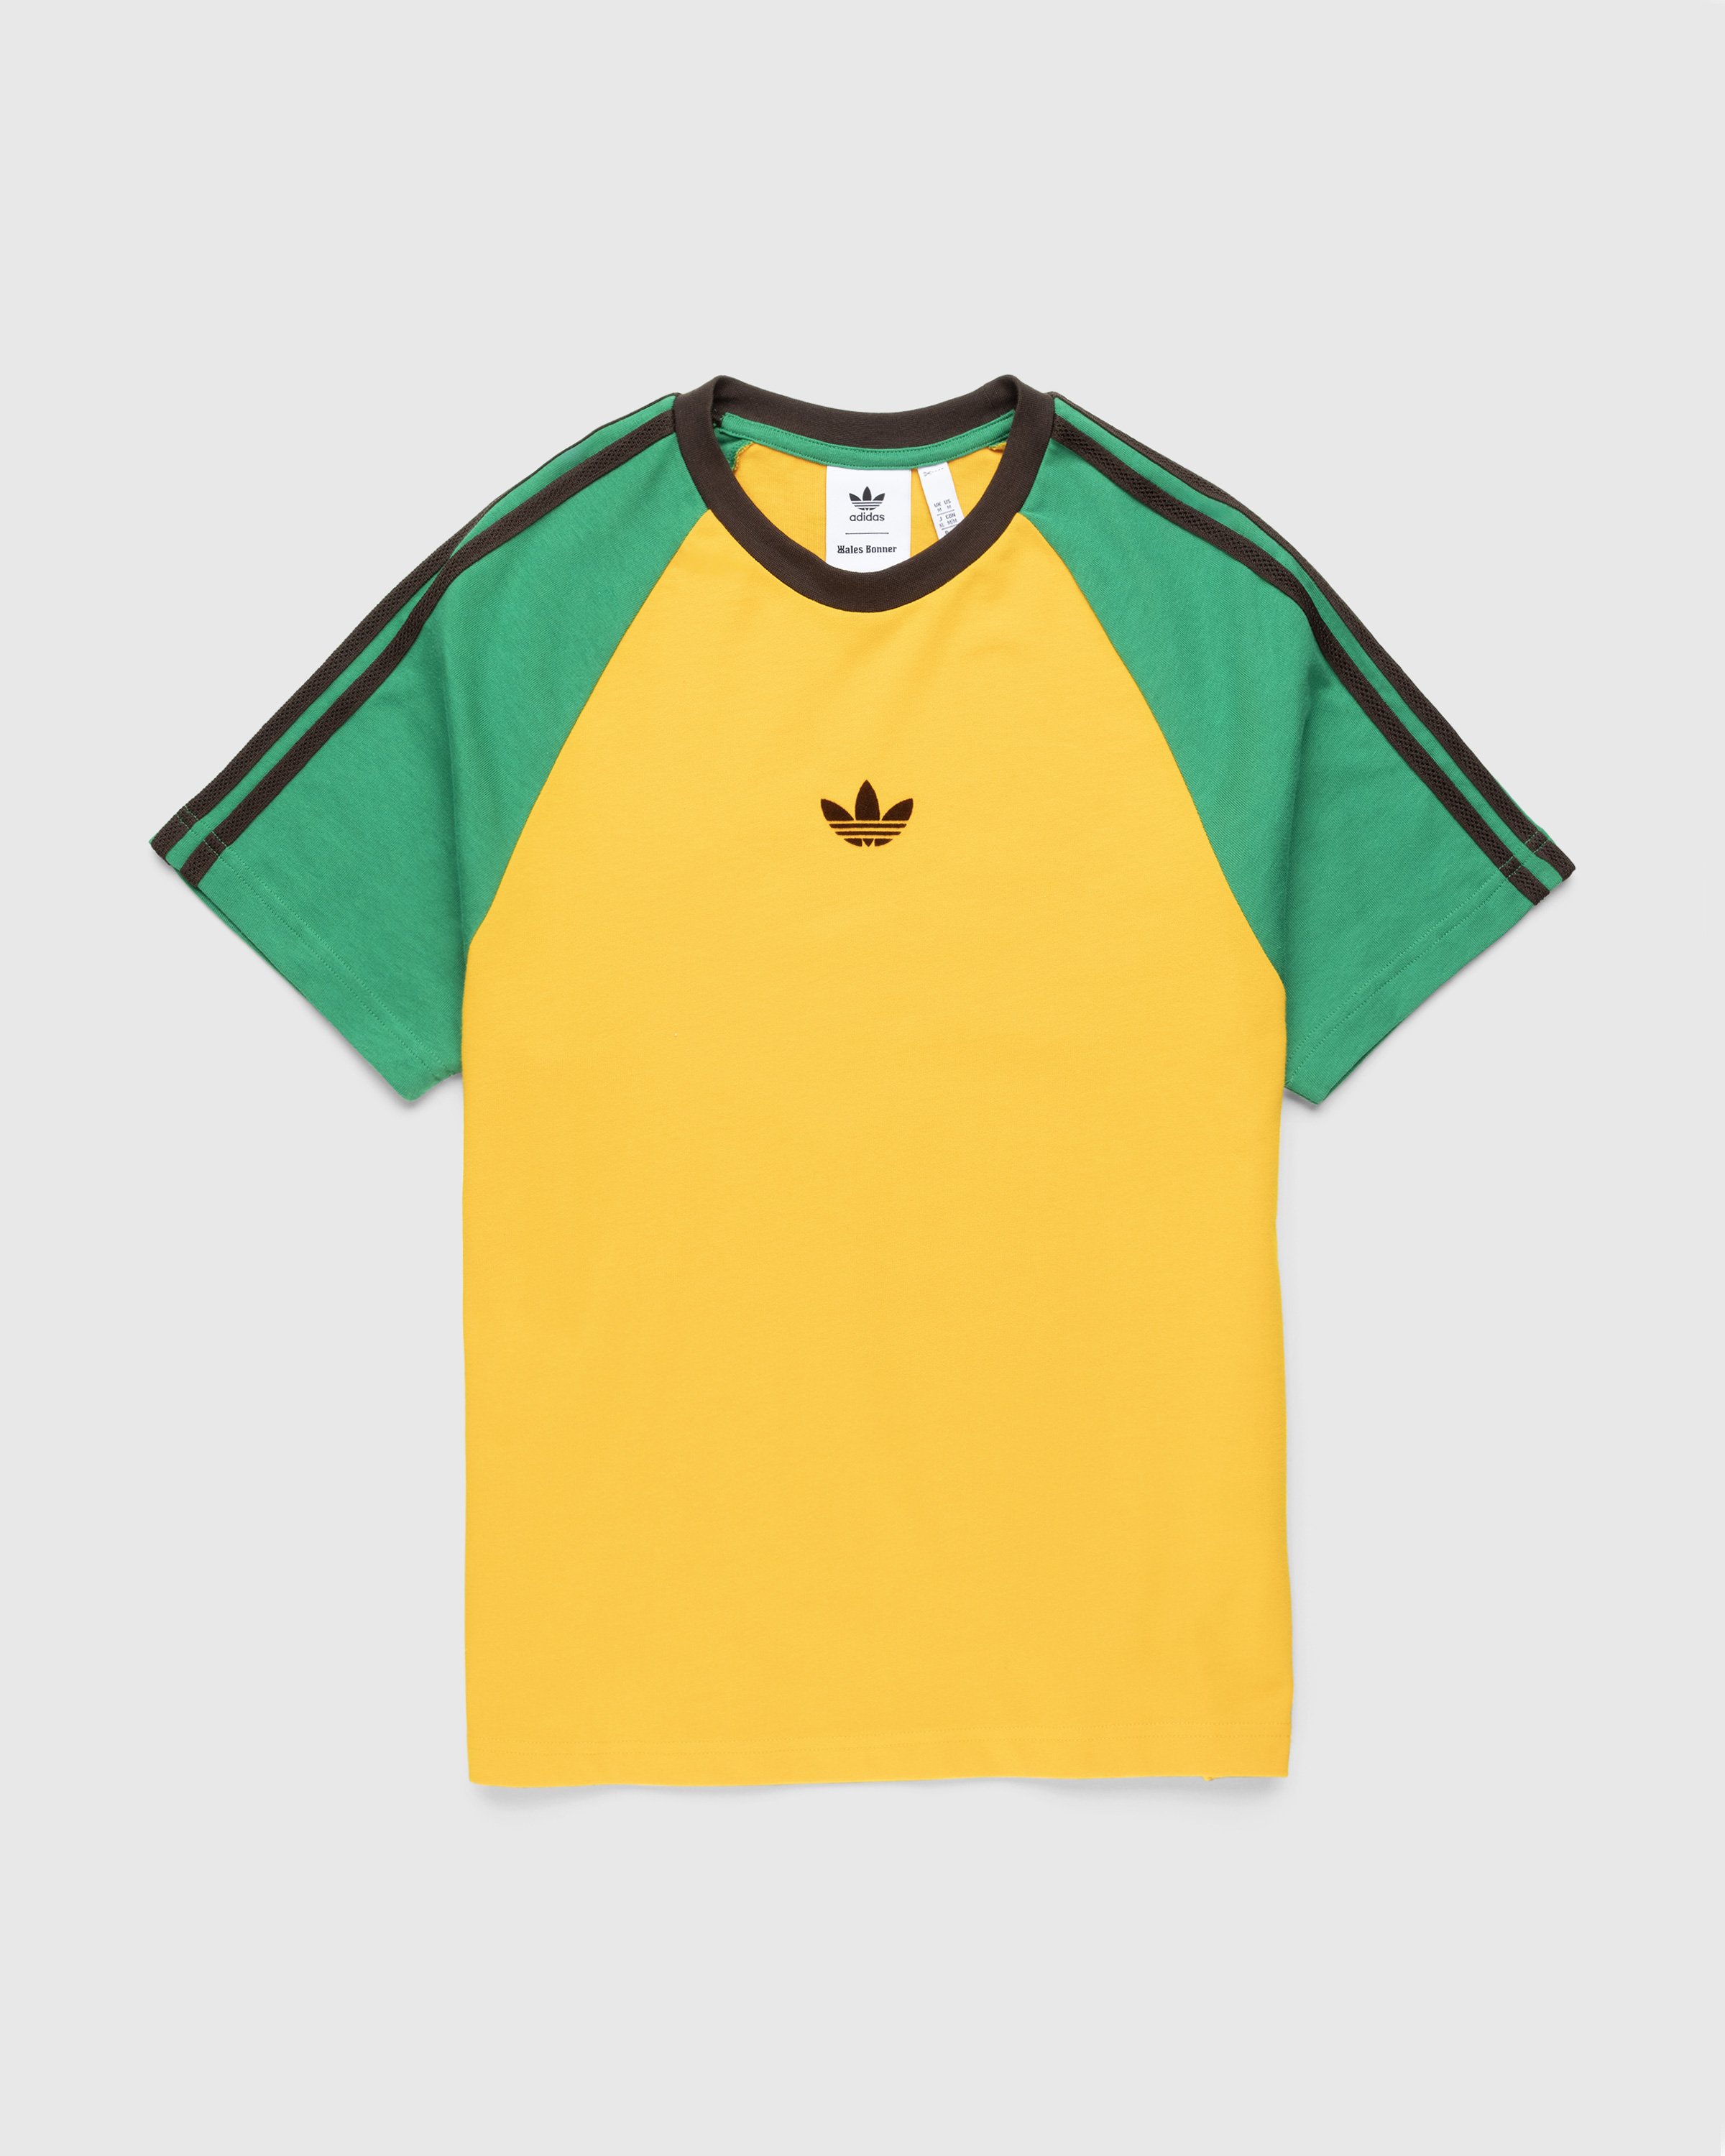 Adidas x Wales Bonner - Organic Cotton Tee Collegiate Gold - Clothing - Yellow - Image 1